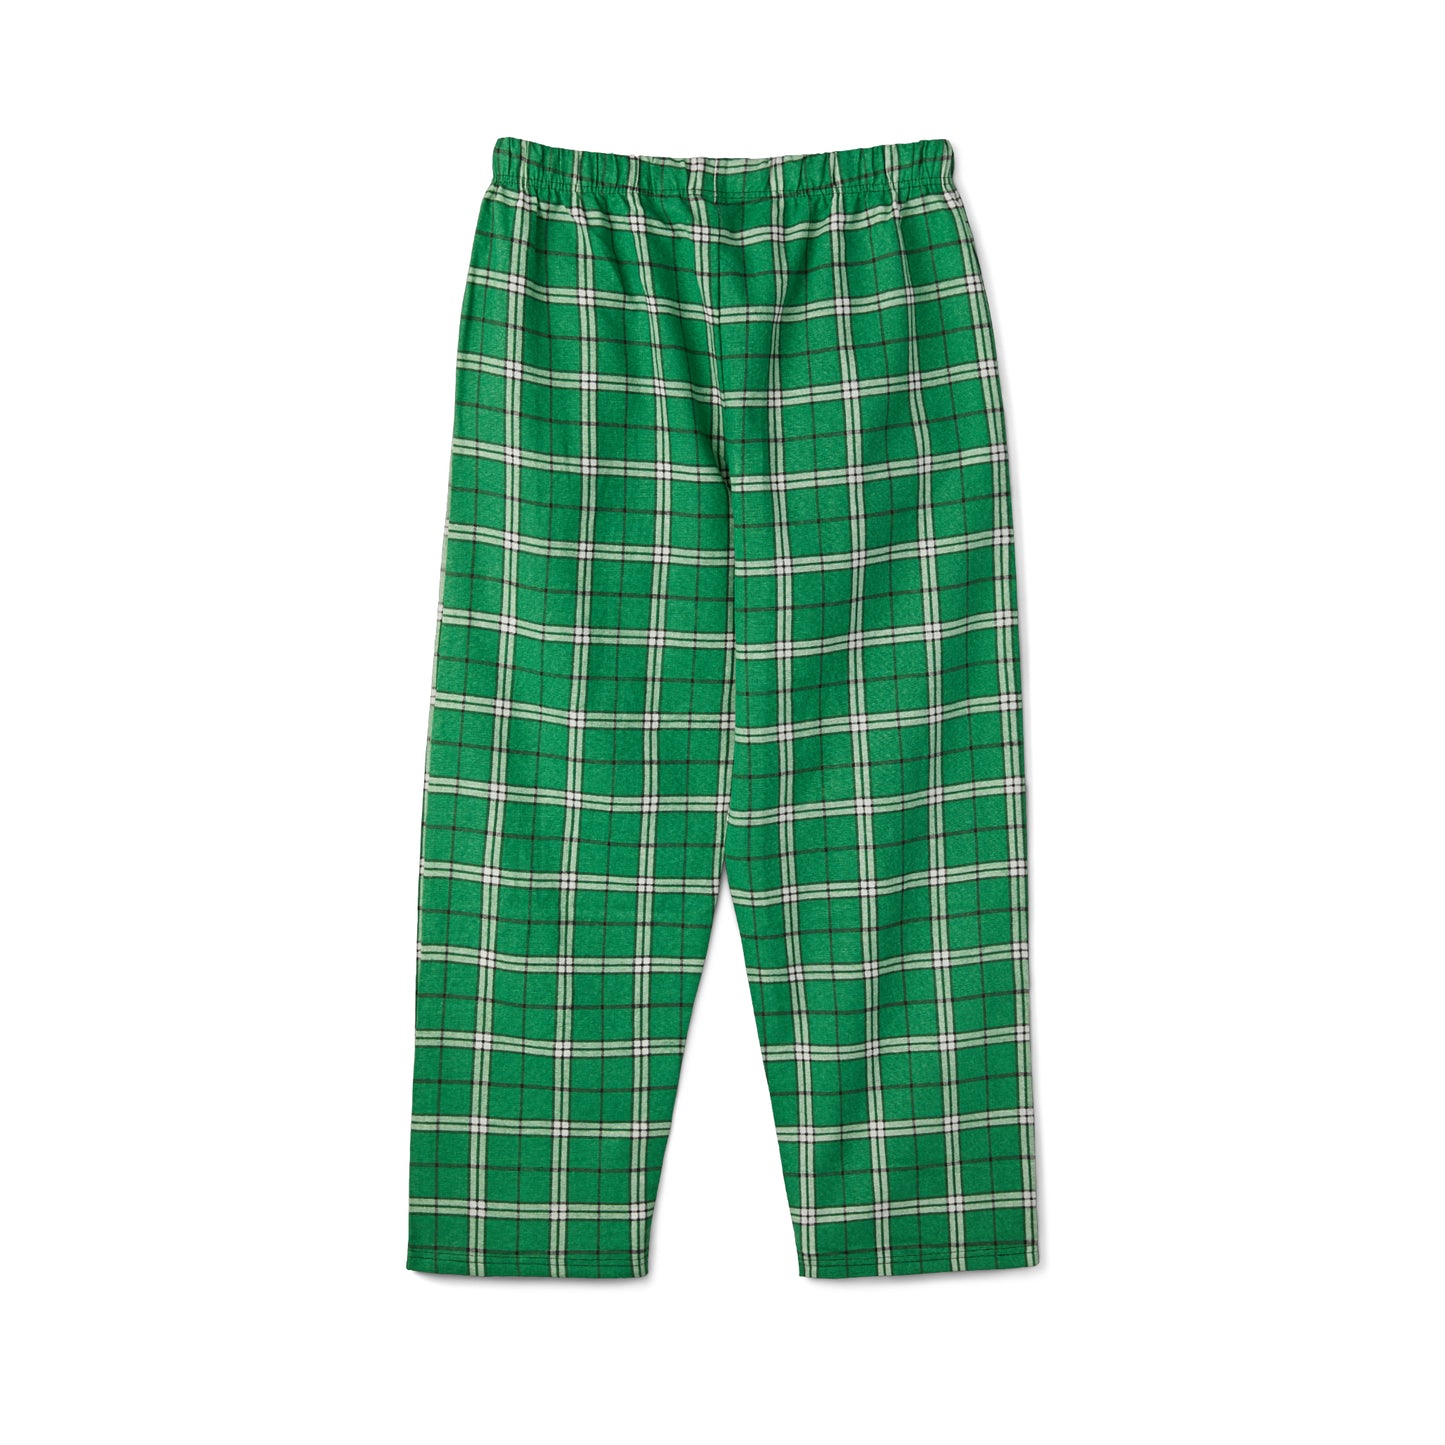 2Bdiscontinued. men's short sleeve pajama set